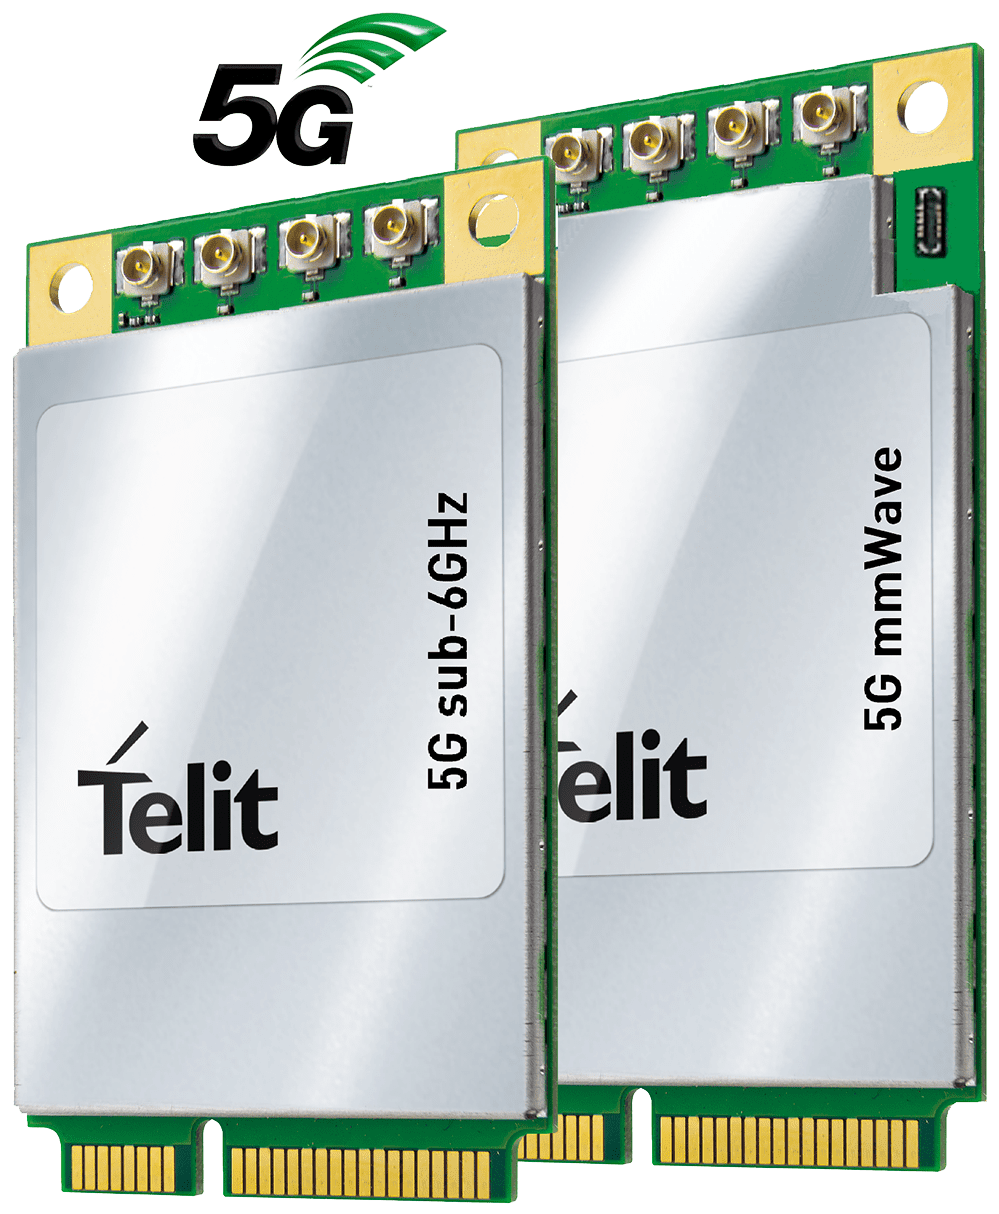 Telit 5G mPCIe Cards